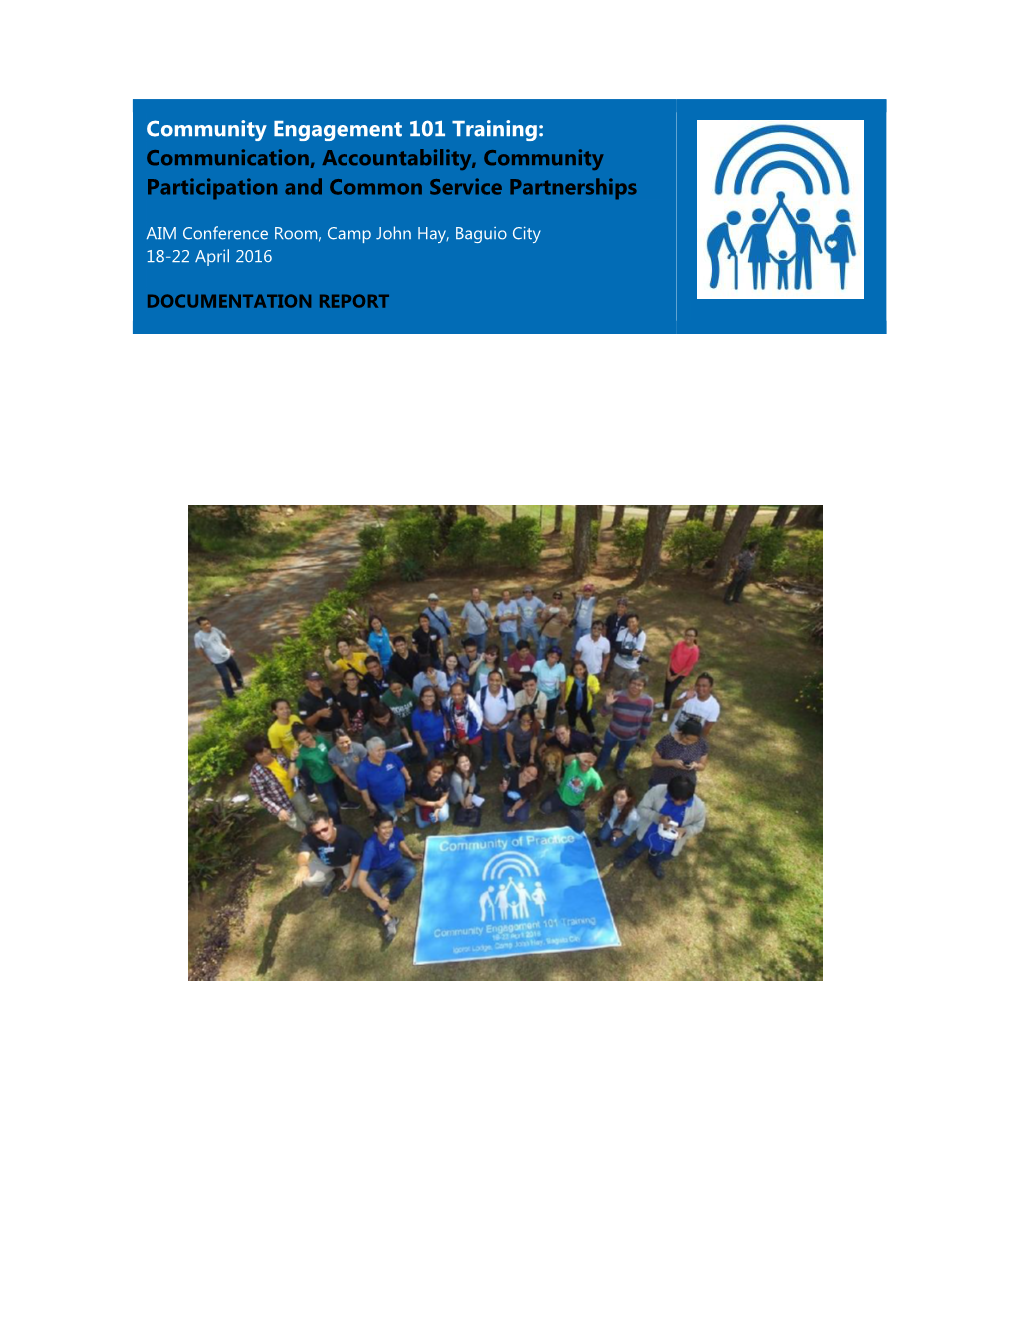 Community Engagement 101 Training: Communication, Accountability, Community Participation and Common Service Partnerships